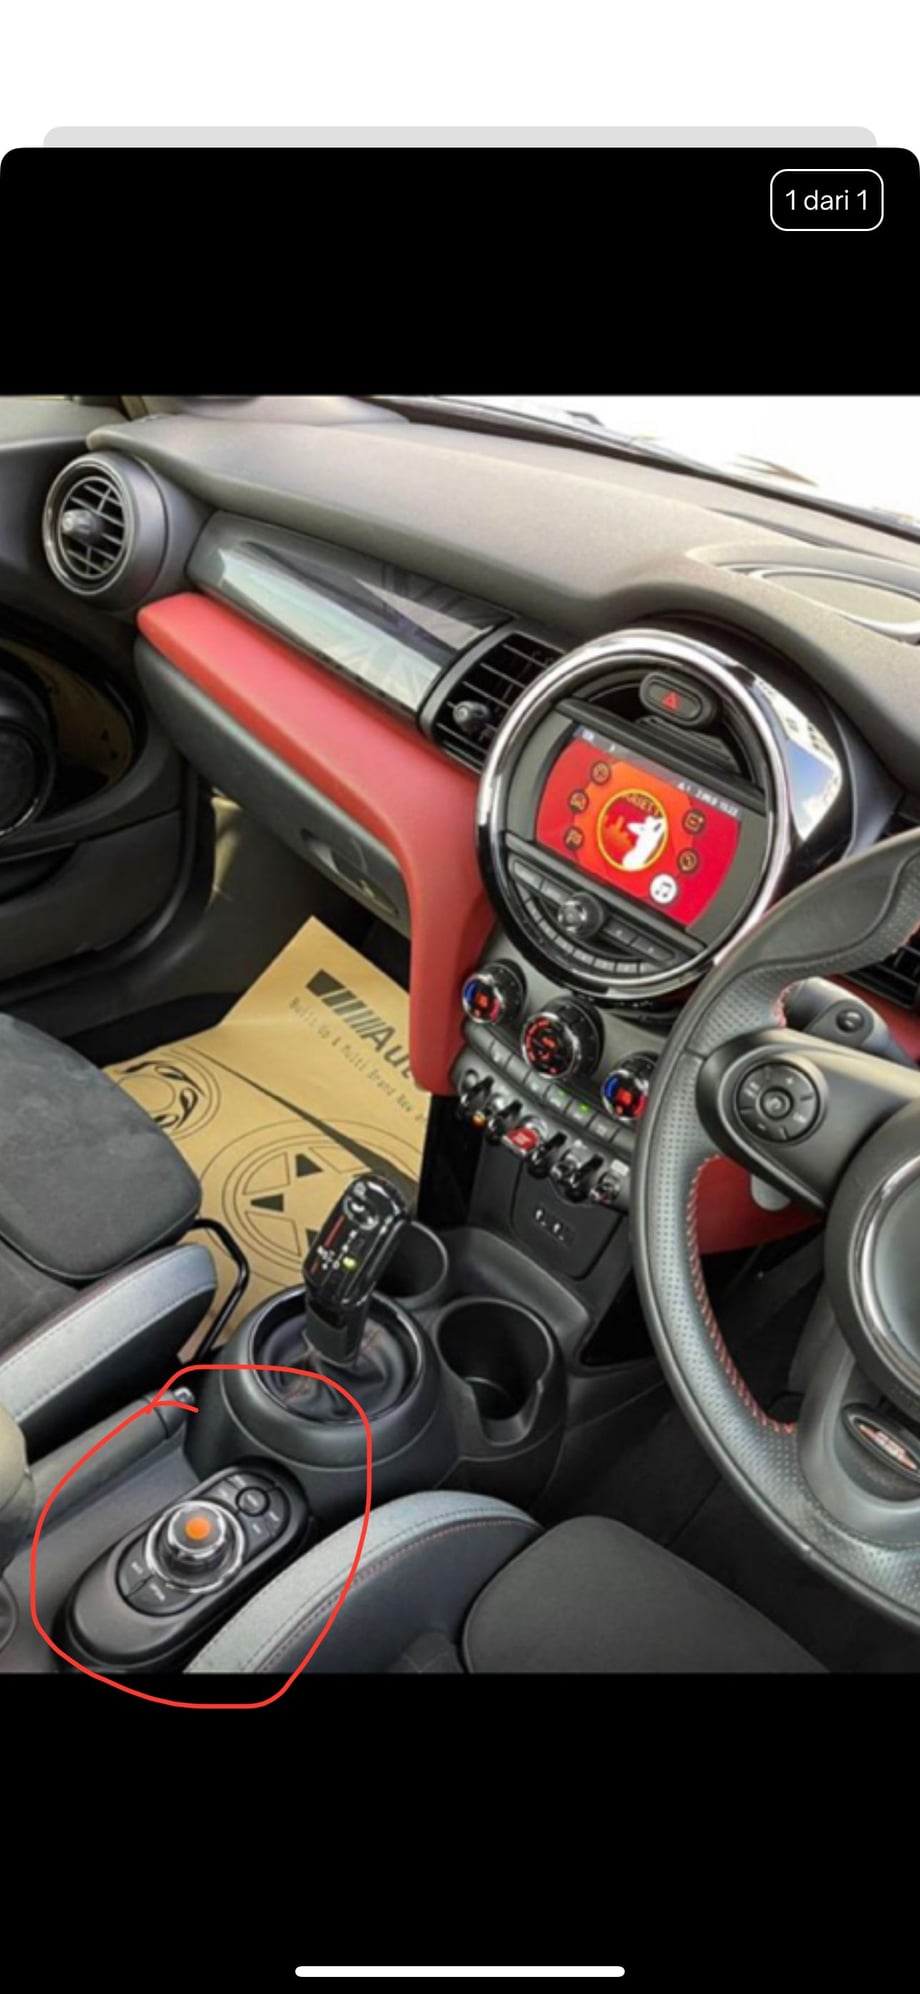 Special design cover fits Mini Cooper Cabrio (F57) 2015-present Gulf Design  indoor car cover